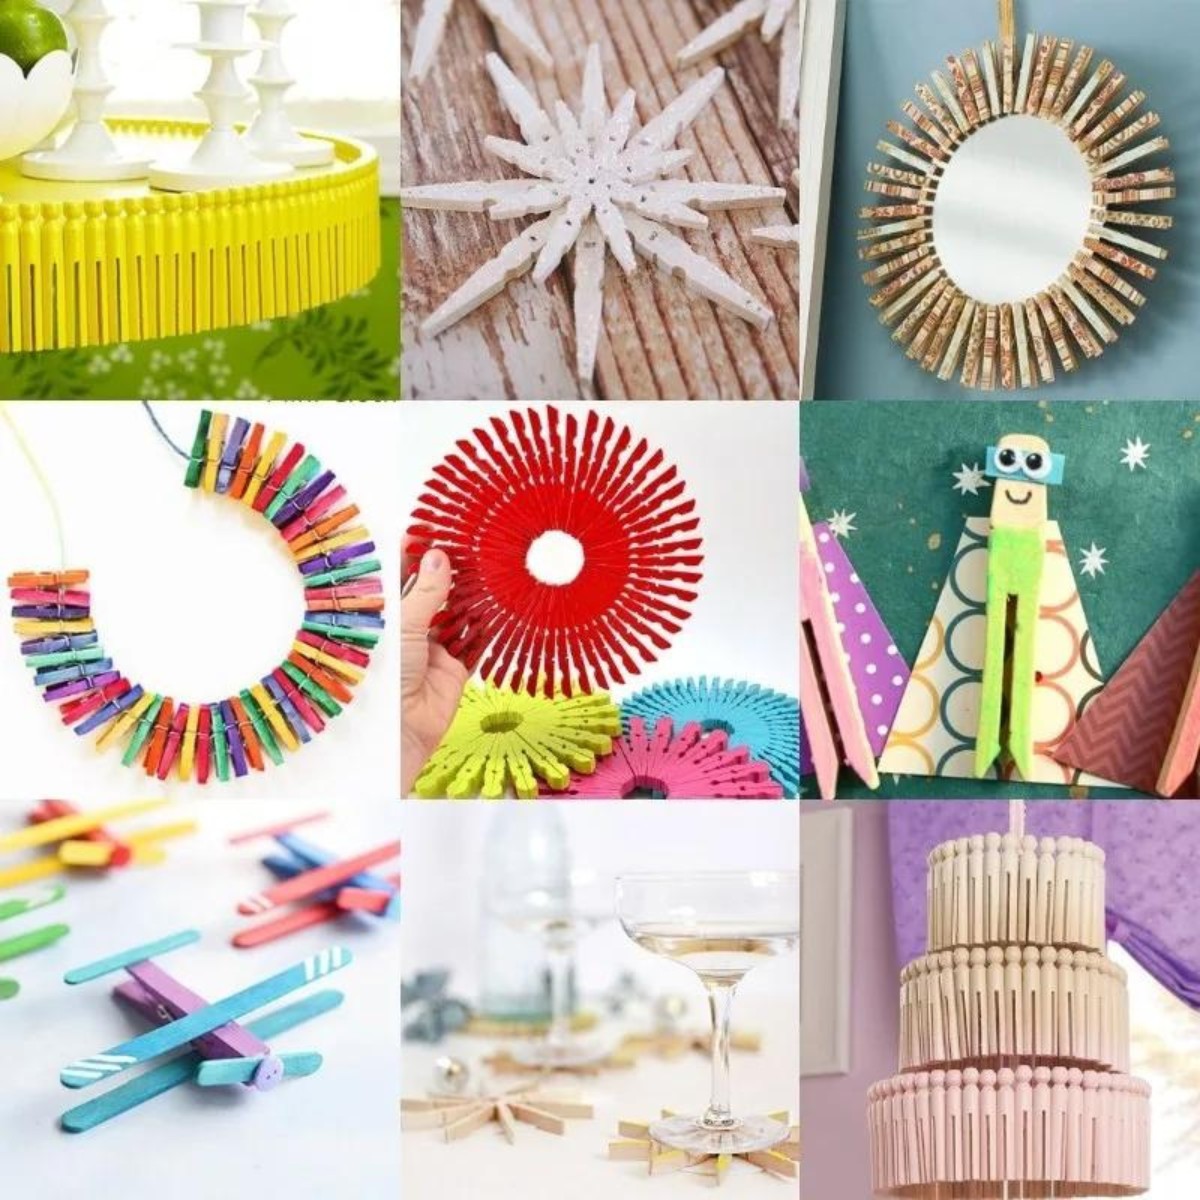 20+ Creative Clothespin Crafts